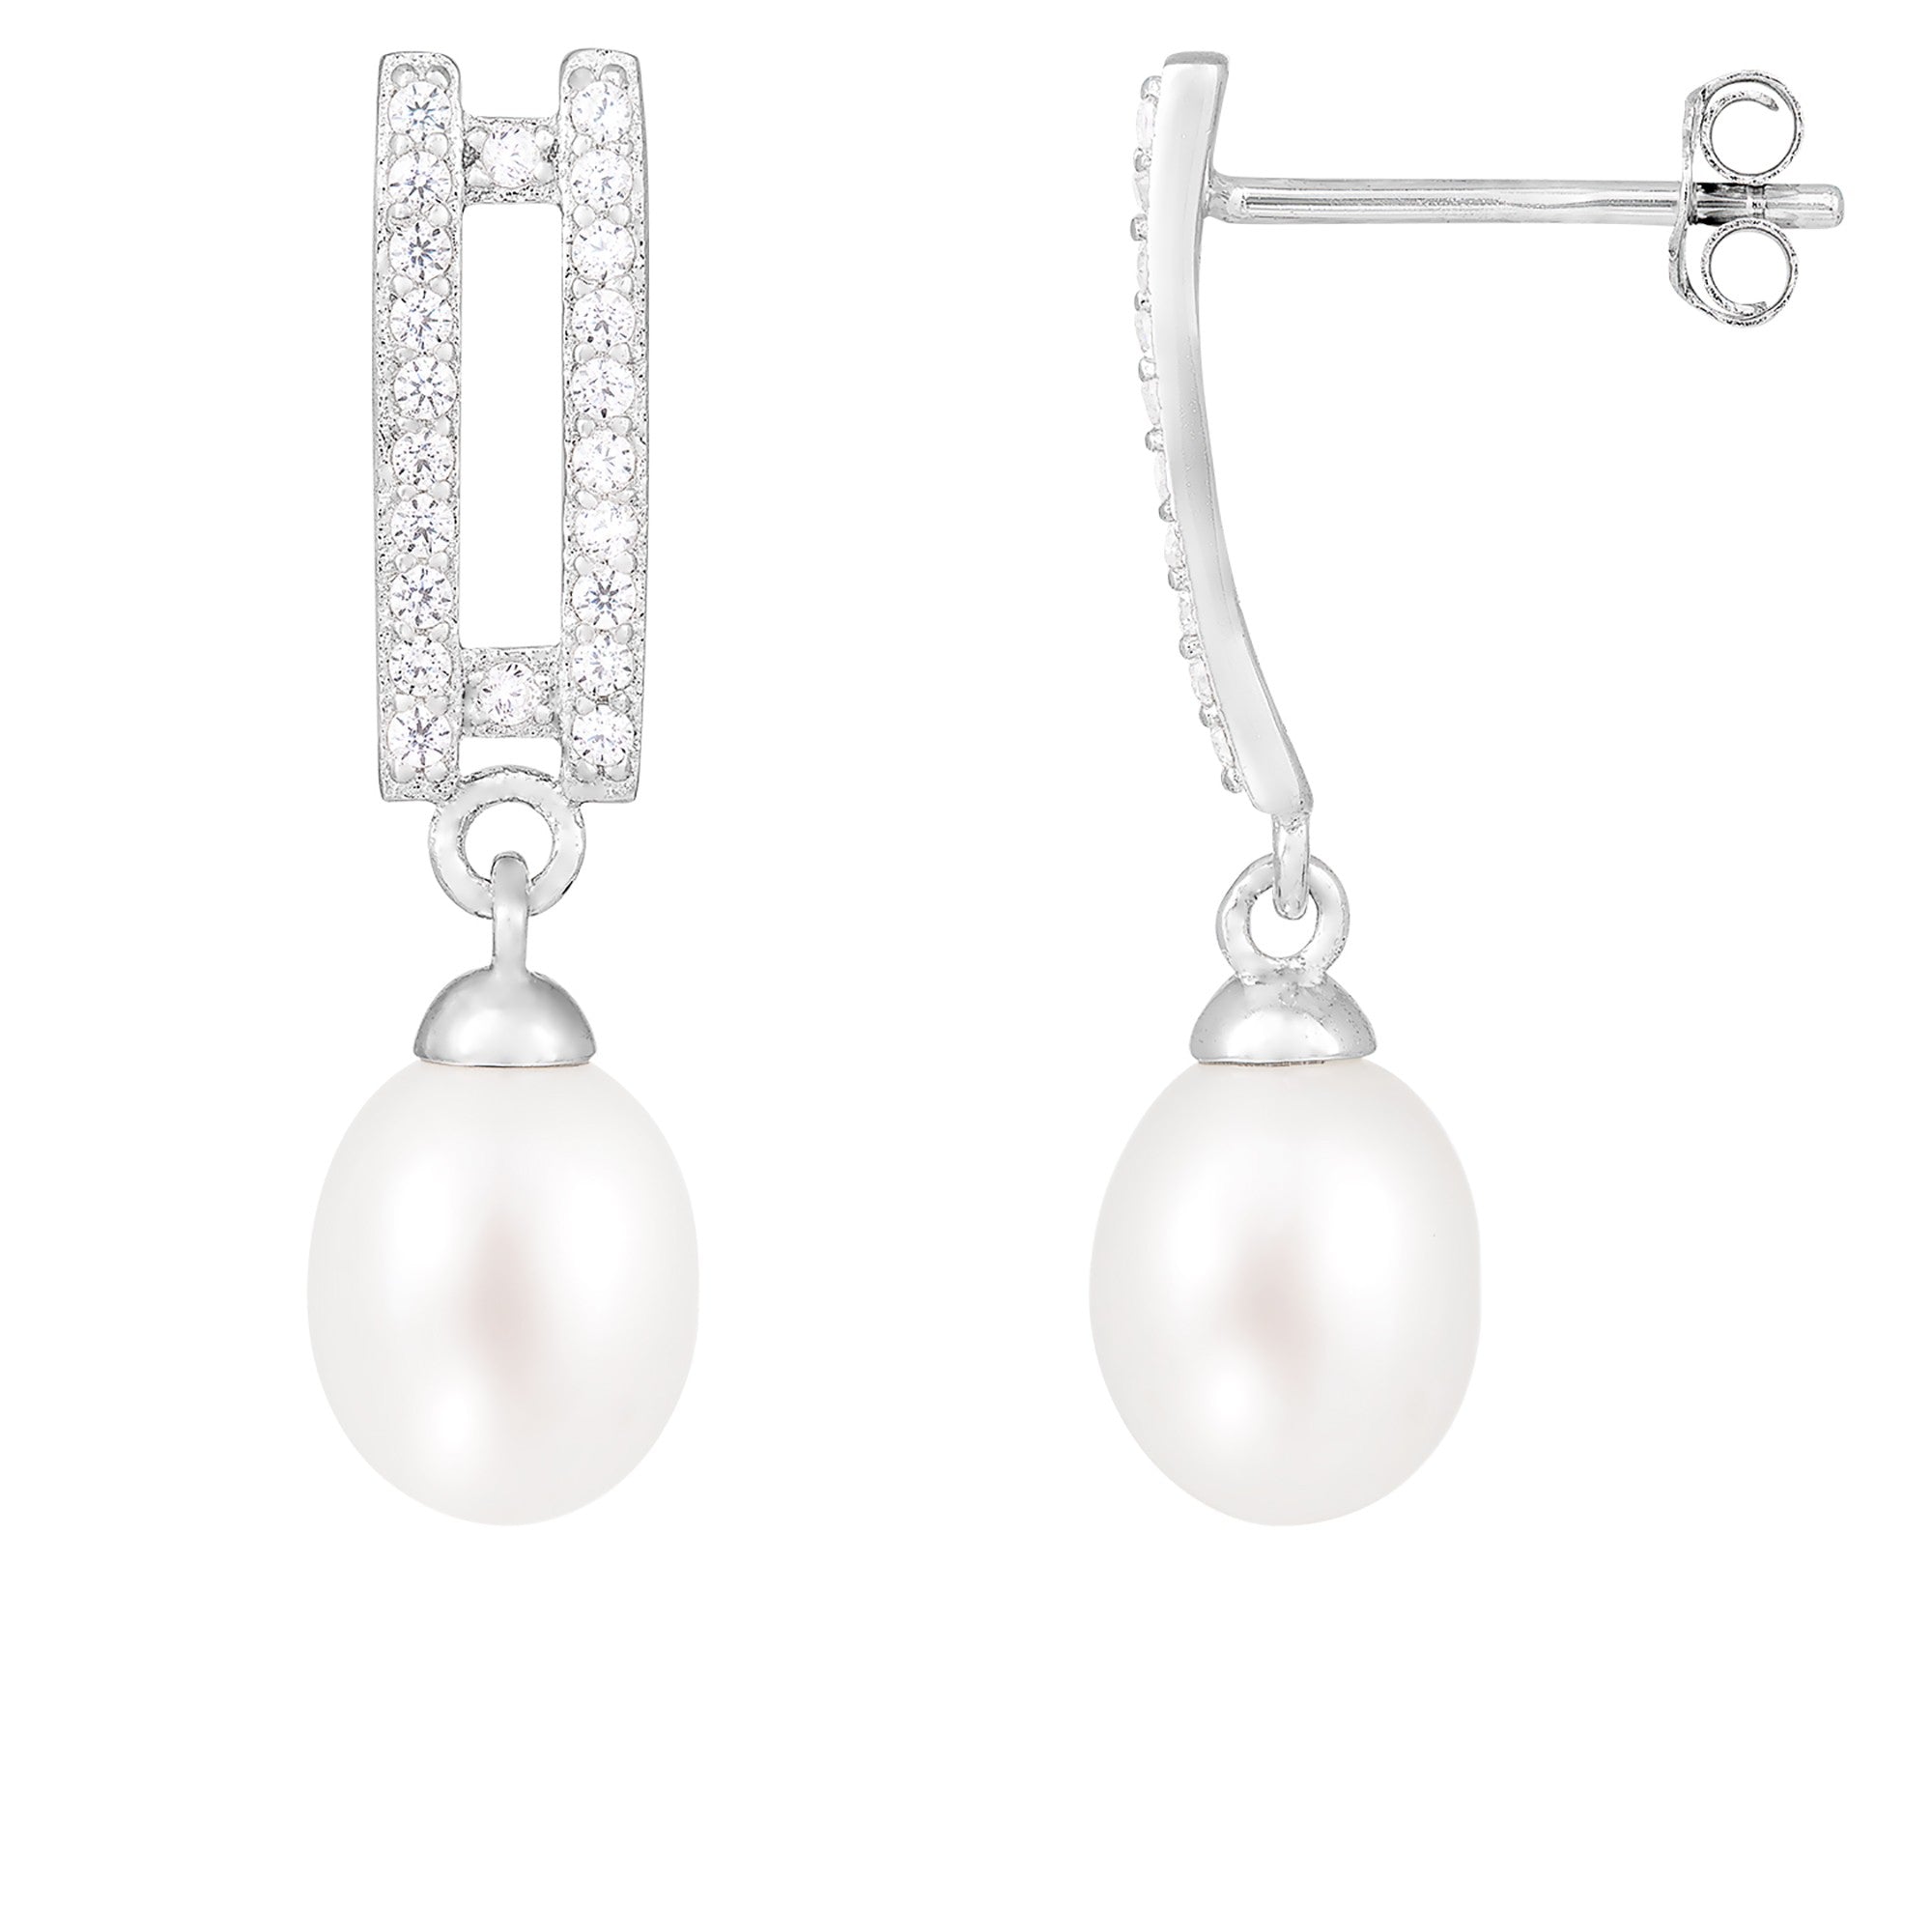 title:Splendid Pearls Sterling Silver Pearl Earrings ESR-422;color:White